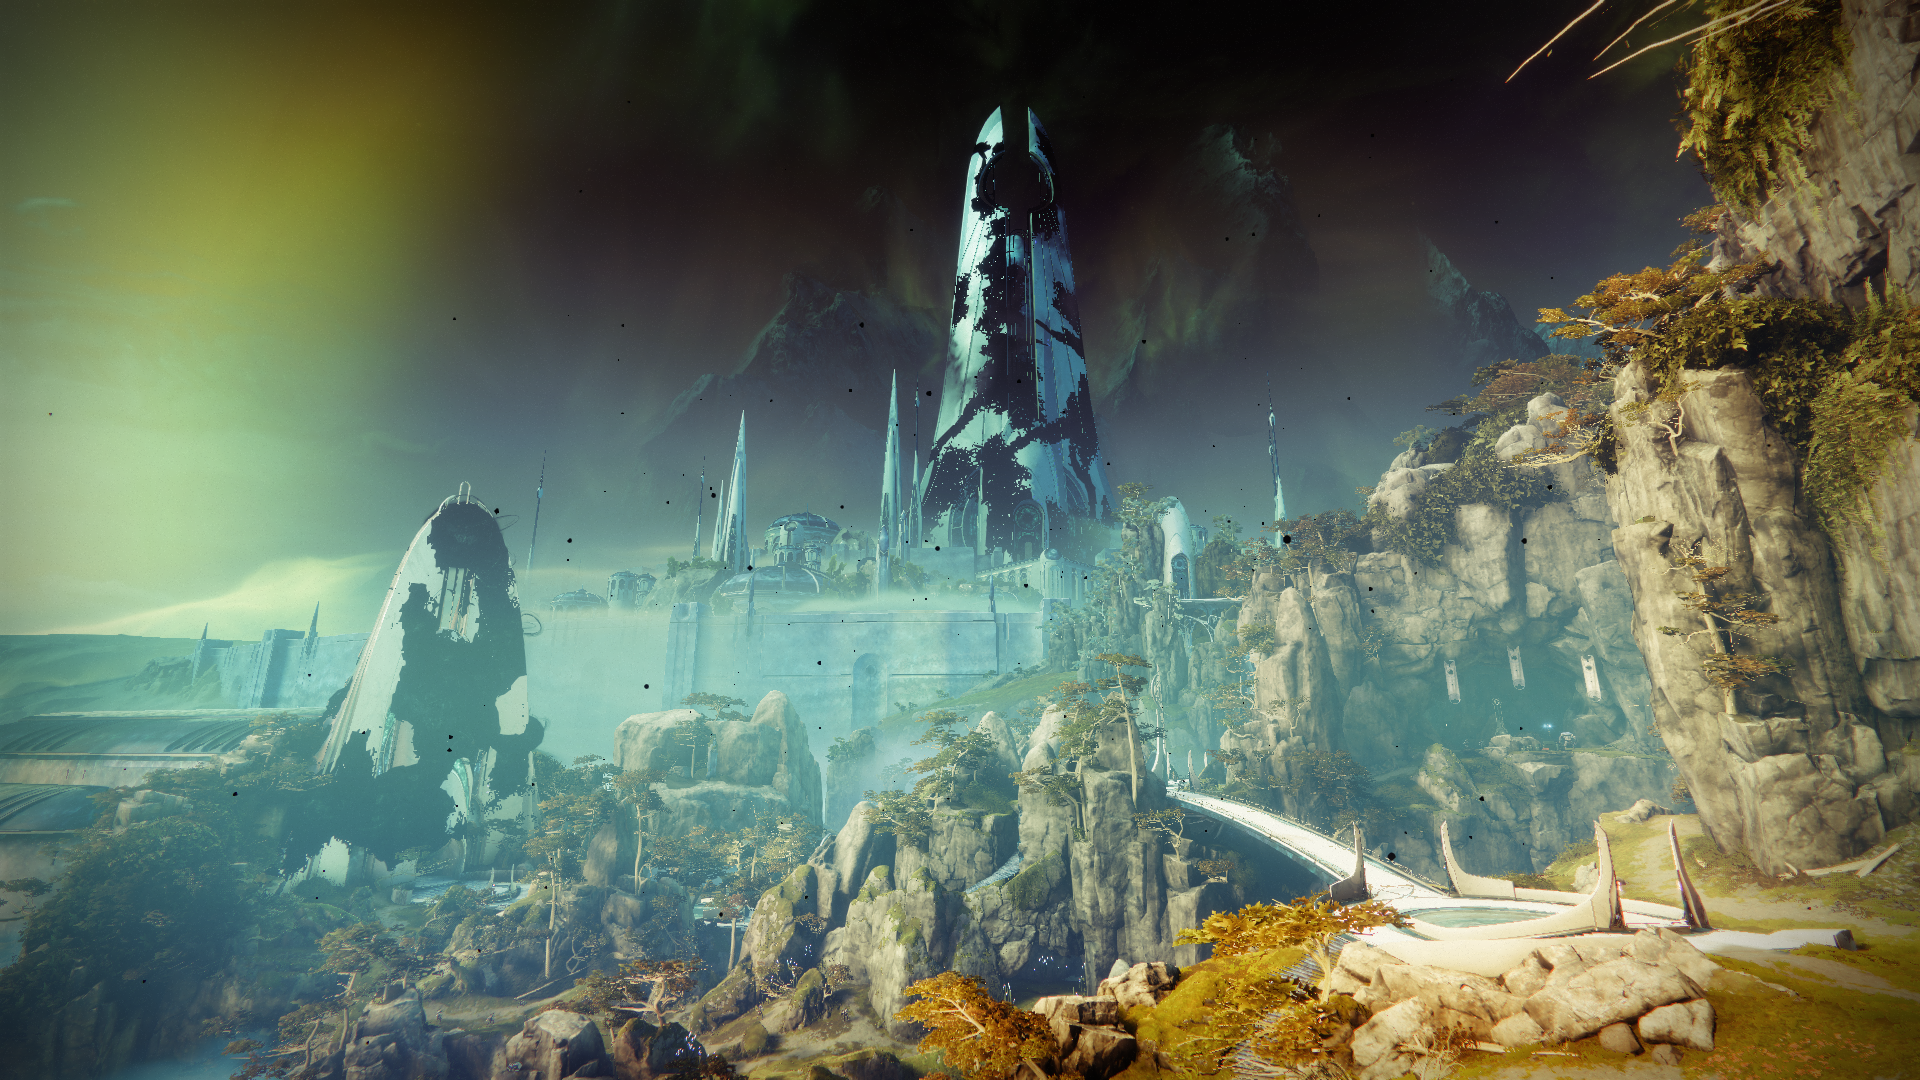 The Forsaken Shores: Exploring Destiny 2’s New Locations And Activities